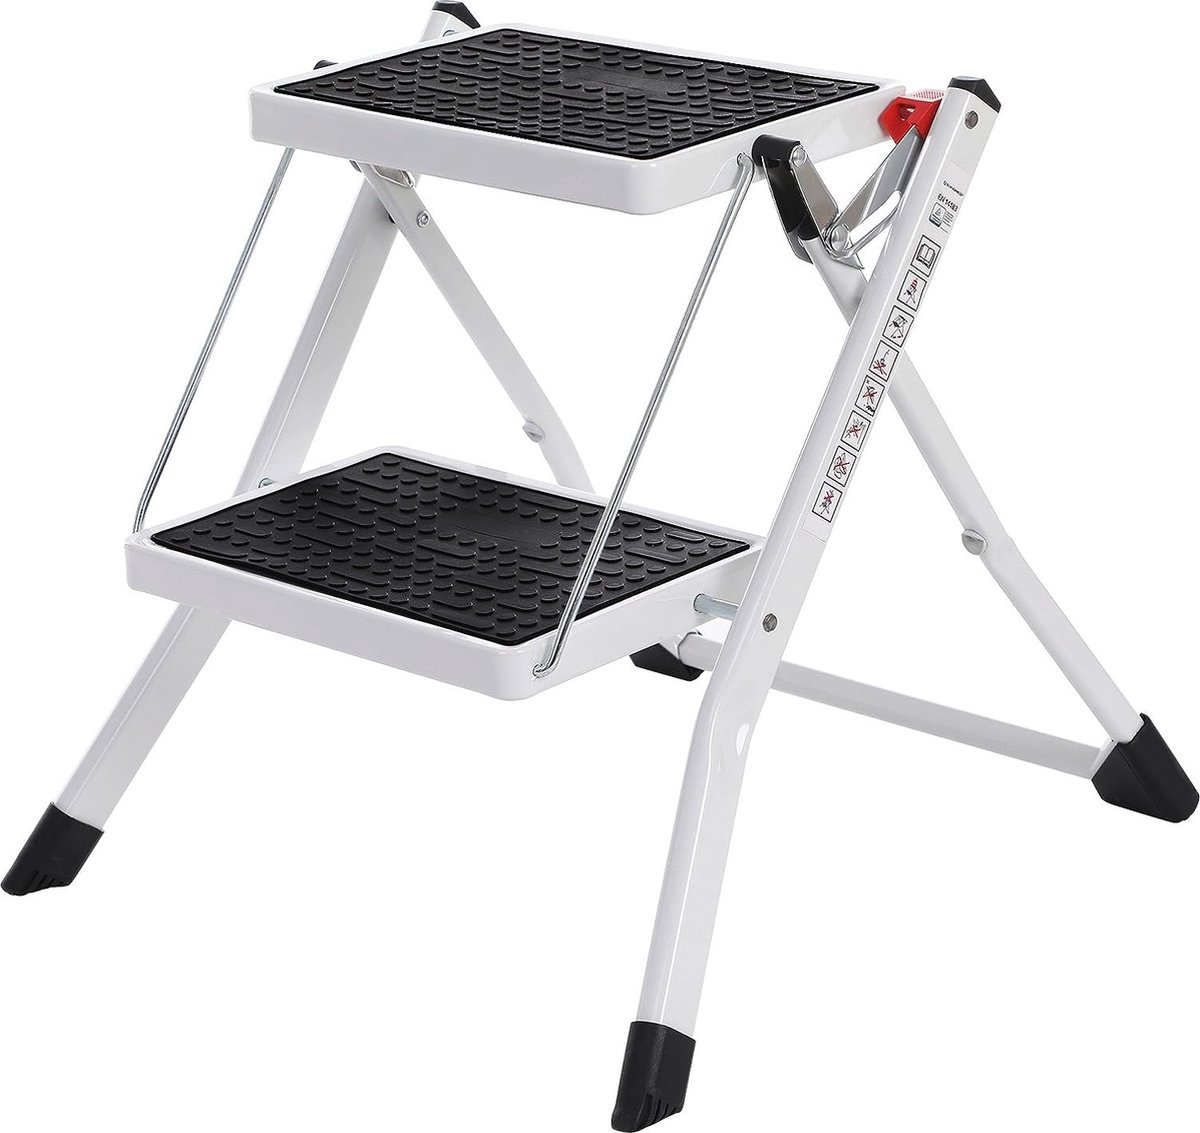 2-sporten ladder, vouwladder, sportbreedte 20 cm, antislip rubber, met handvat, draagvermogen 150 kg, staal, GS-gecertificeerd, zwart en wit GSL02WT